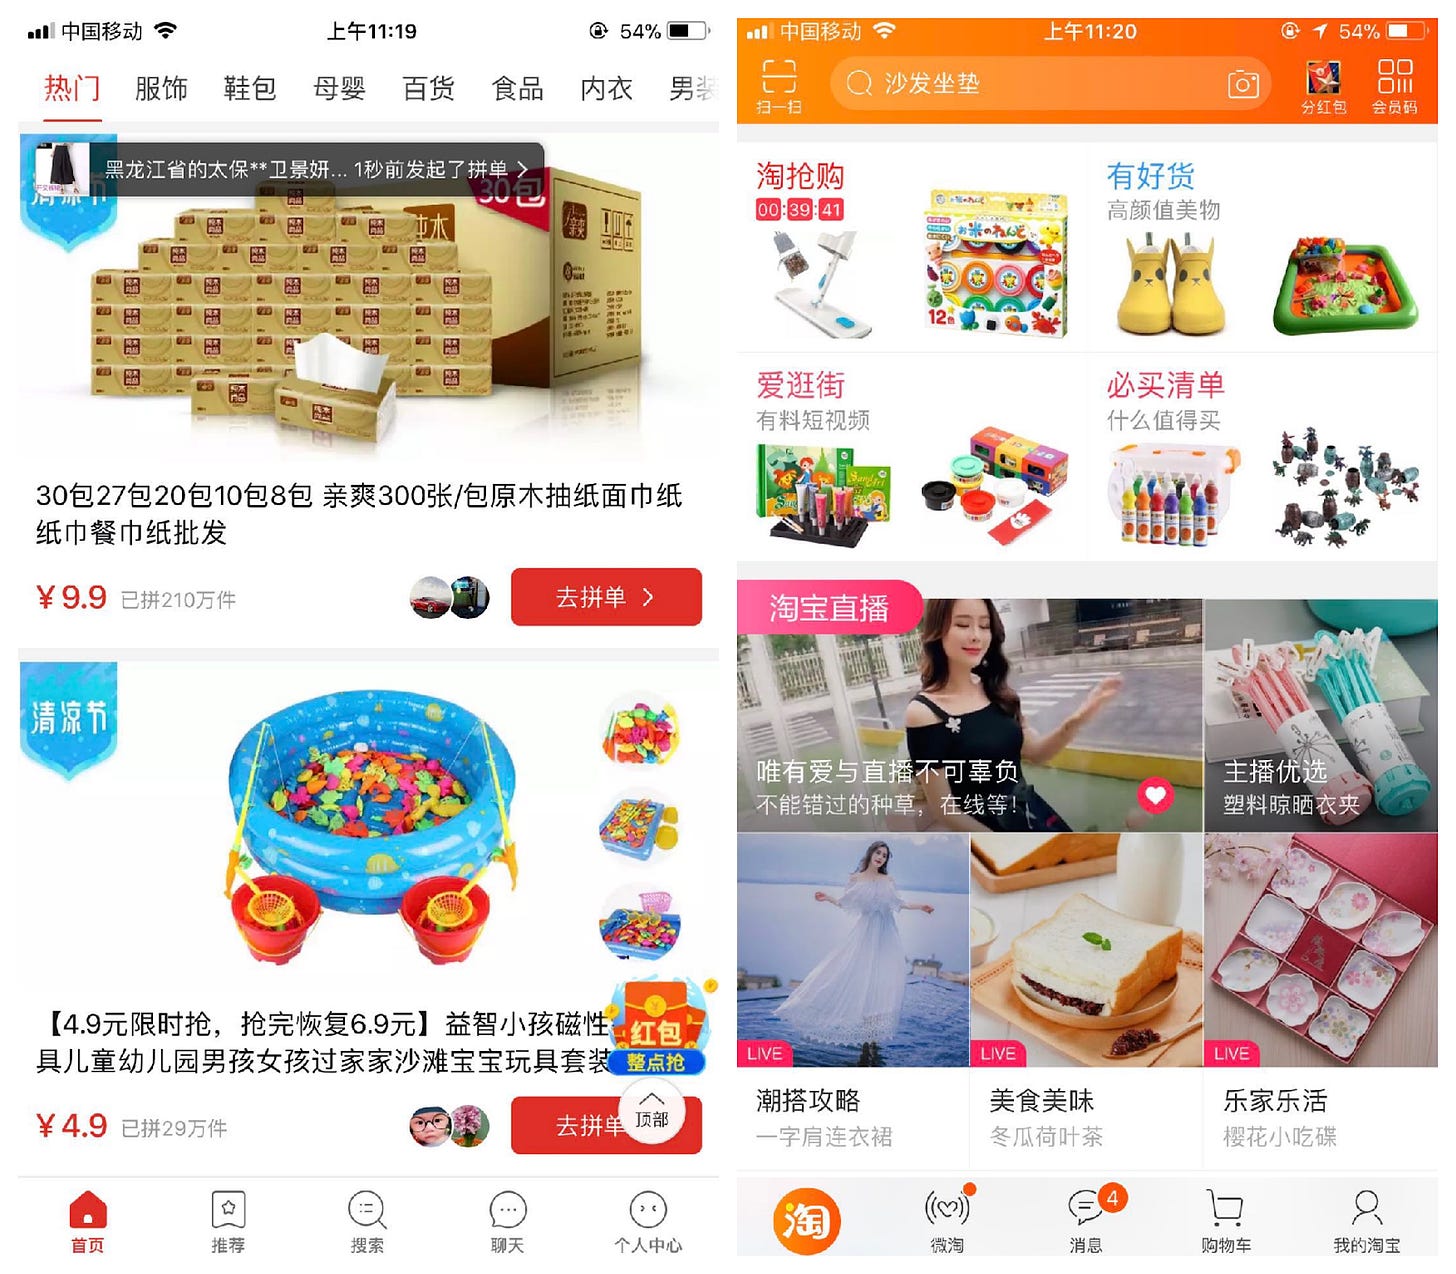 H&M returns to Alibaba's Tmall after Chinese boycott - Retail Gazette